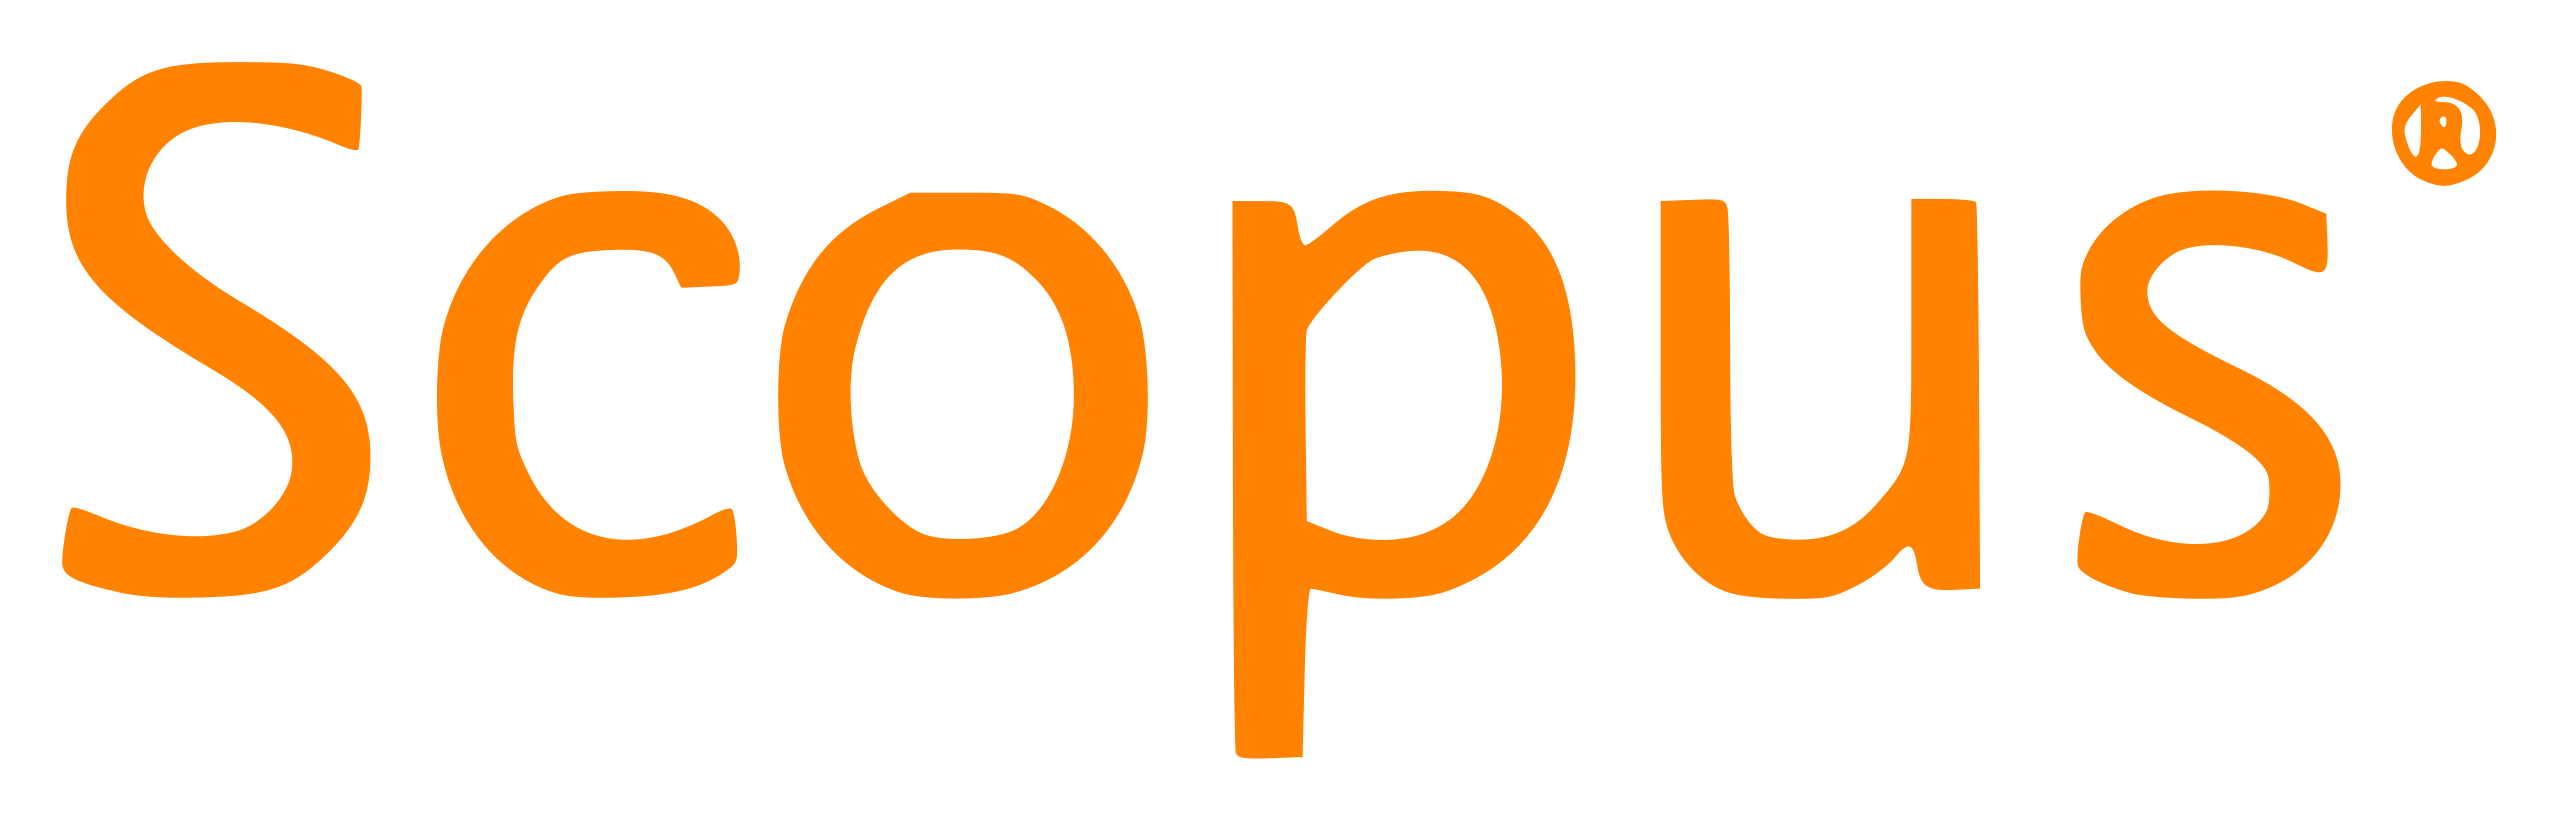 File:Scopus logo.svg - Wikimedia Commons